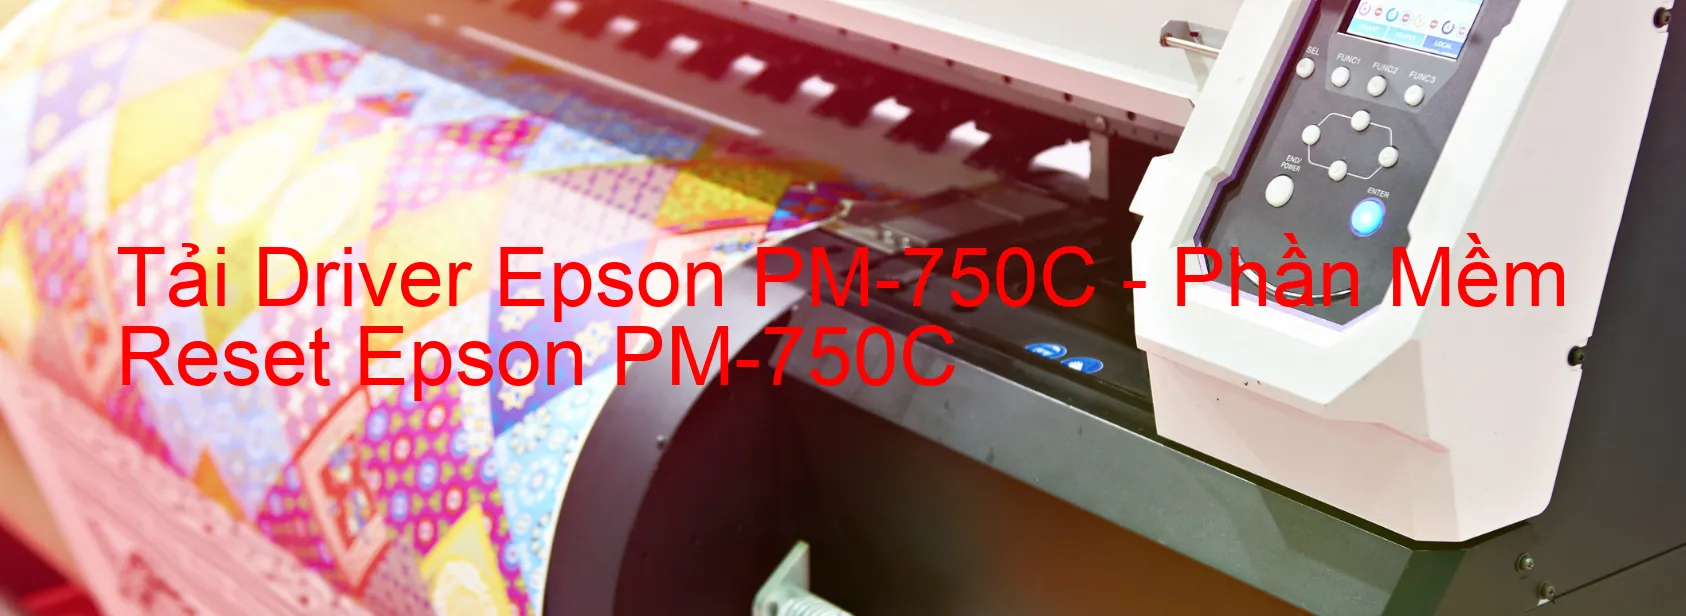 Driver Epson PM-750C, Phần Mềm Reset Epson PM-750C